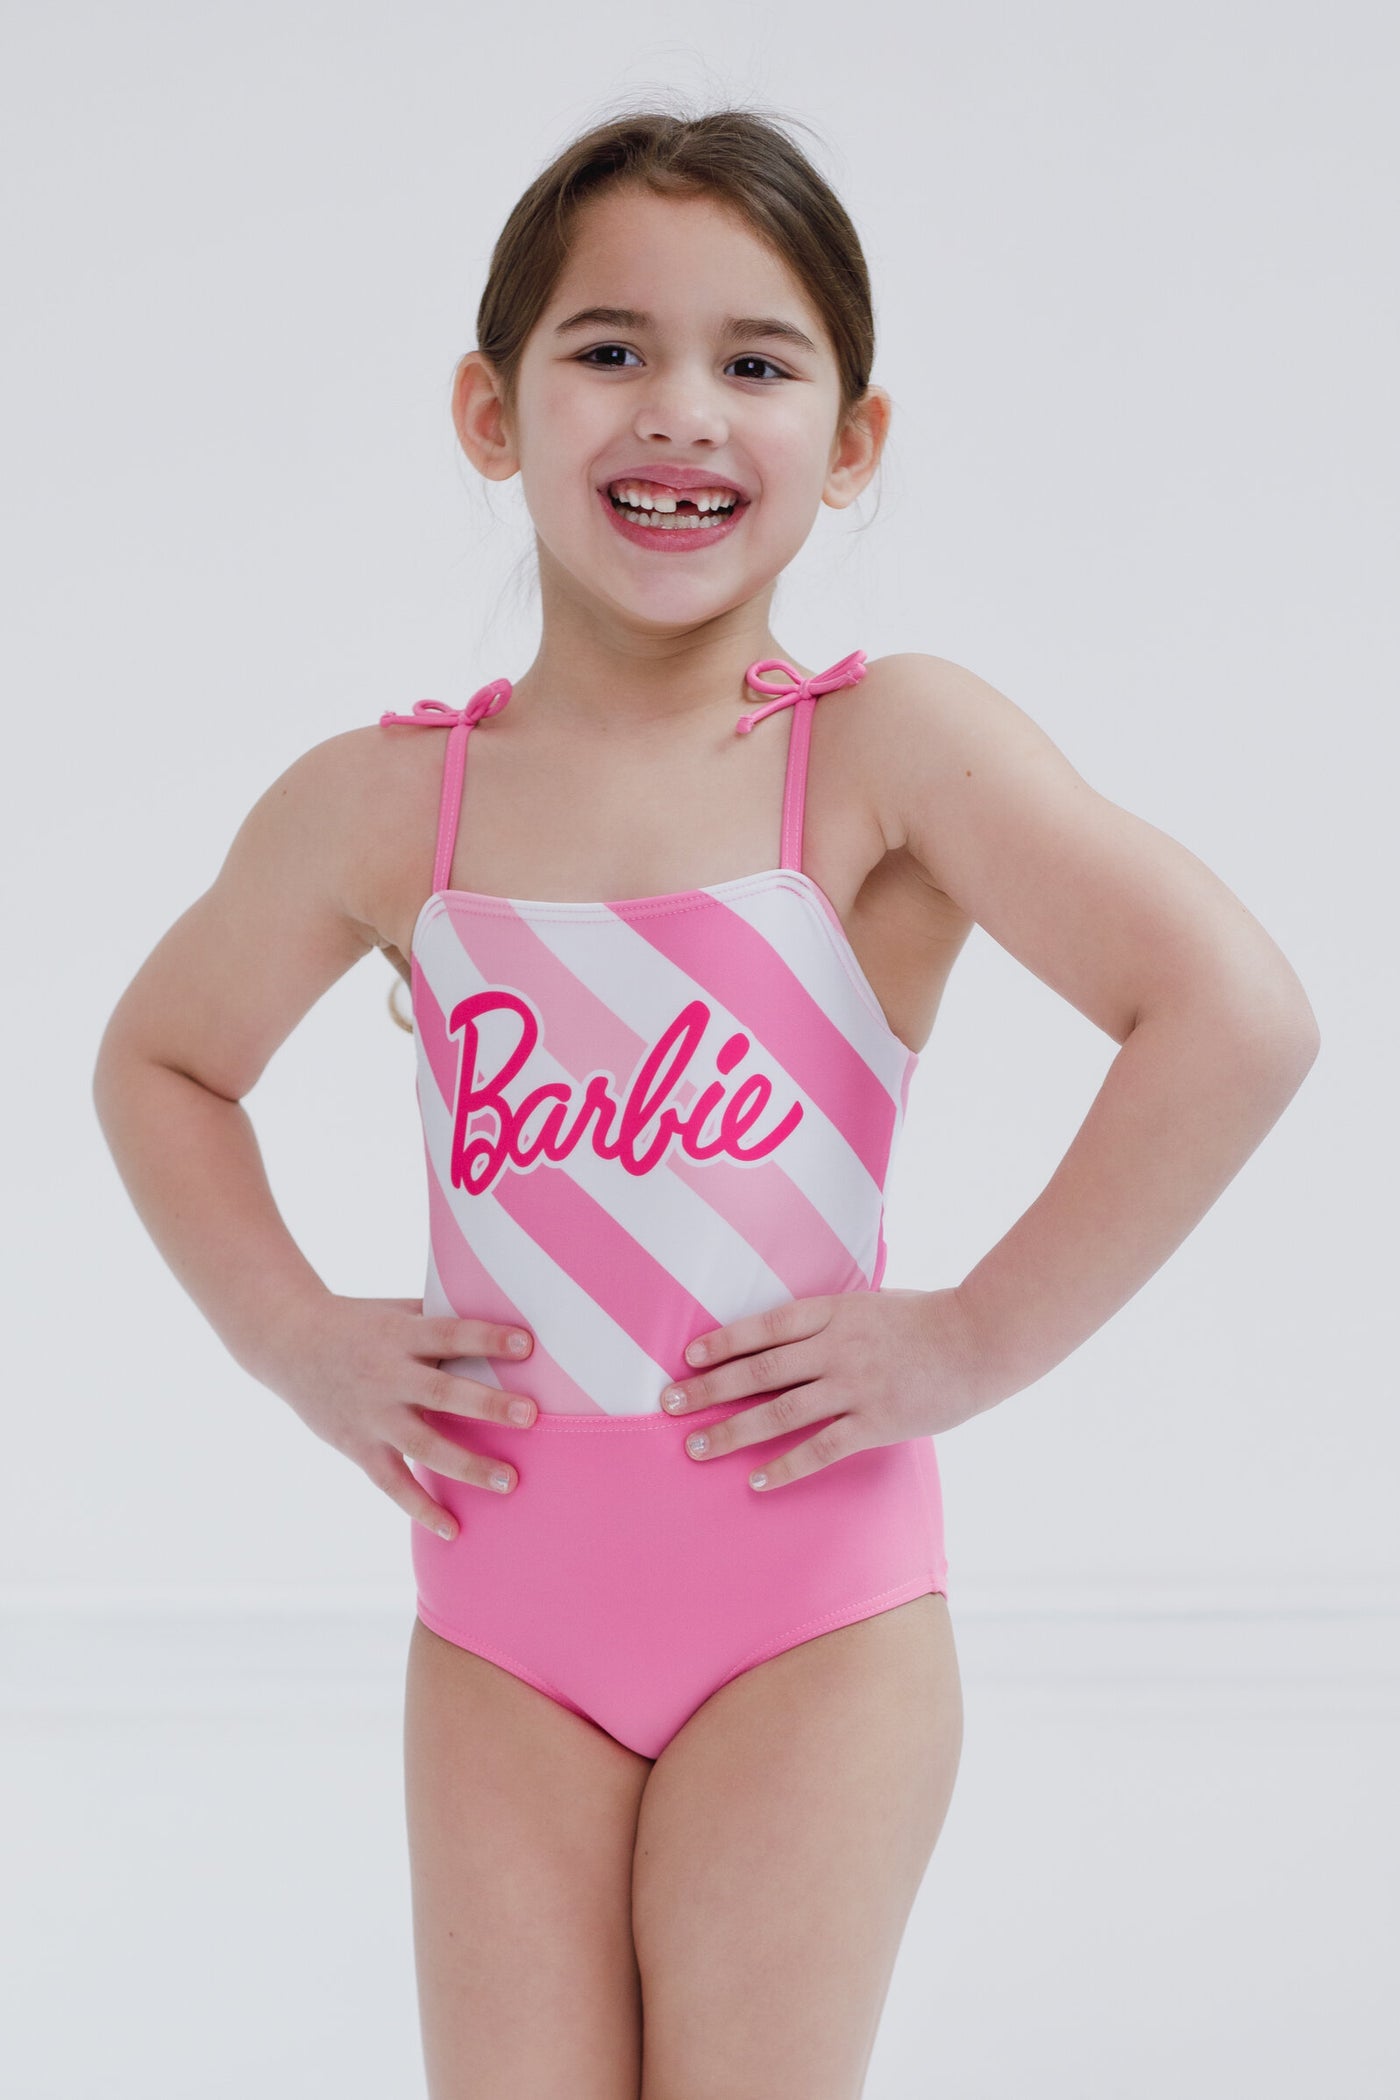 Barbie One Piece Bathing Suit